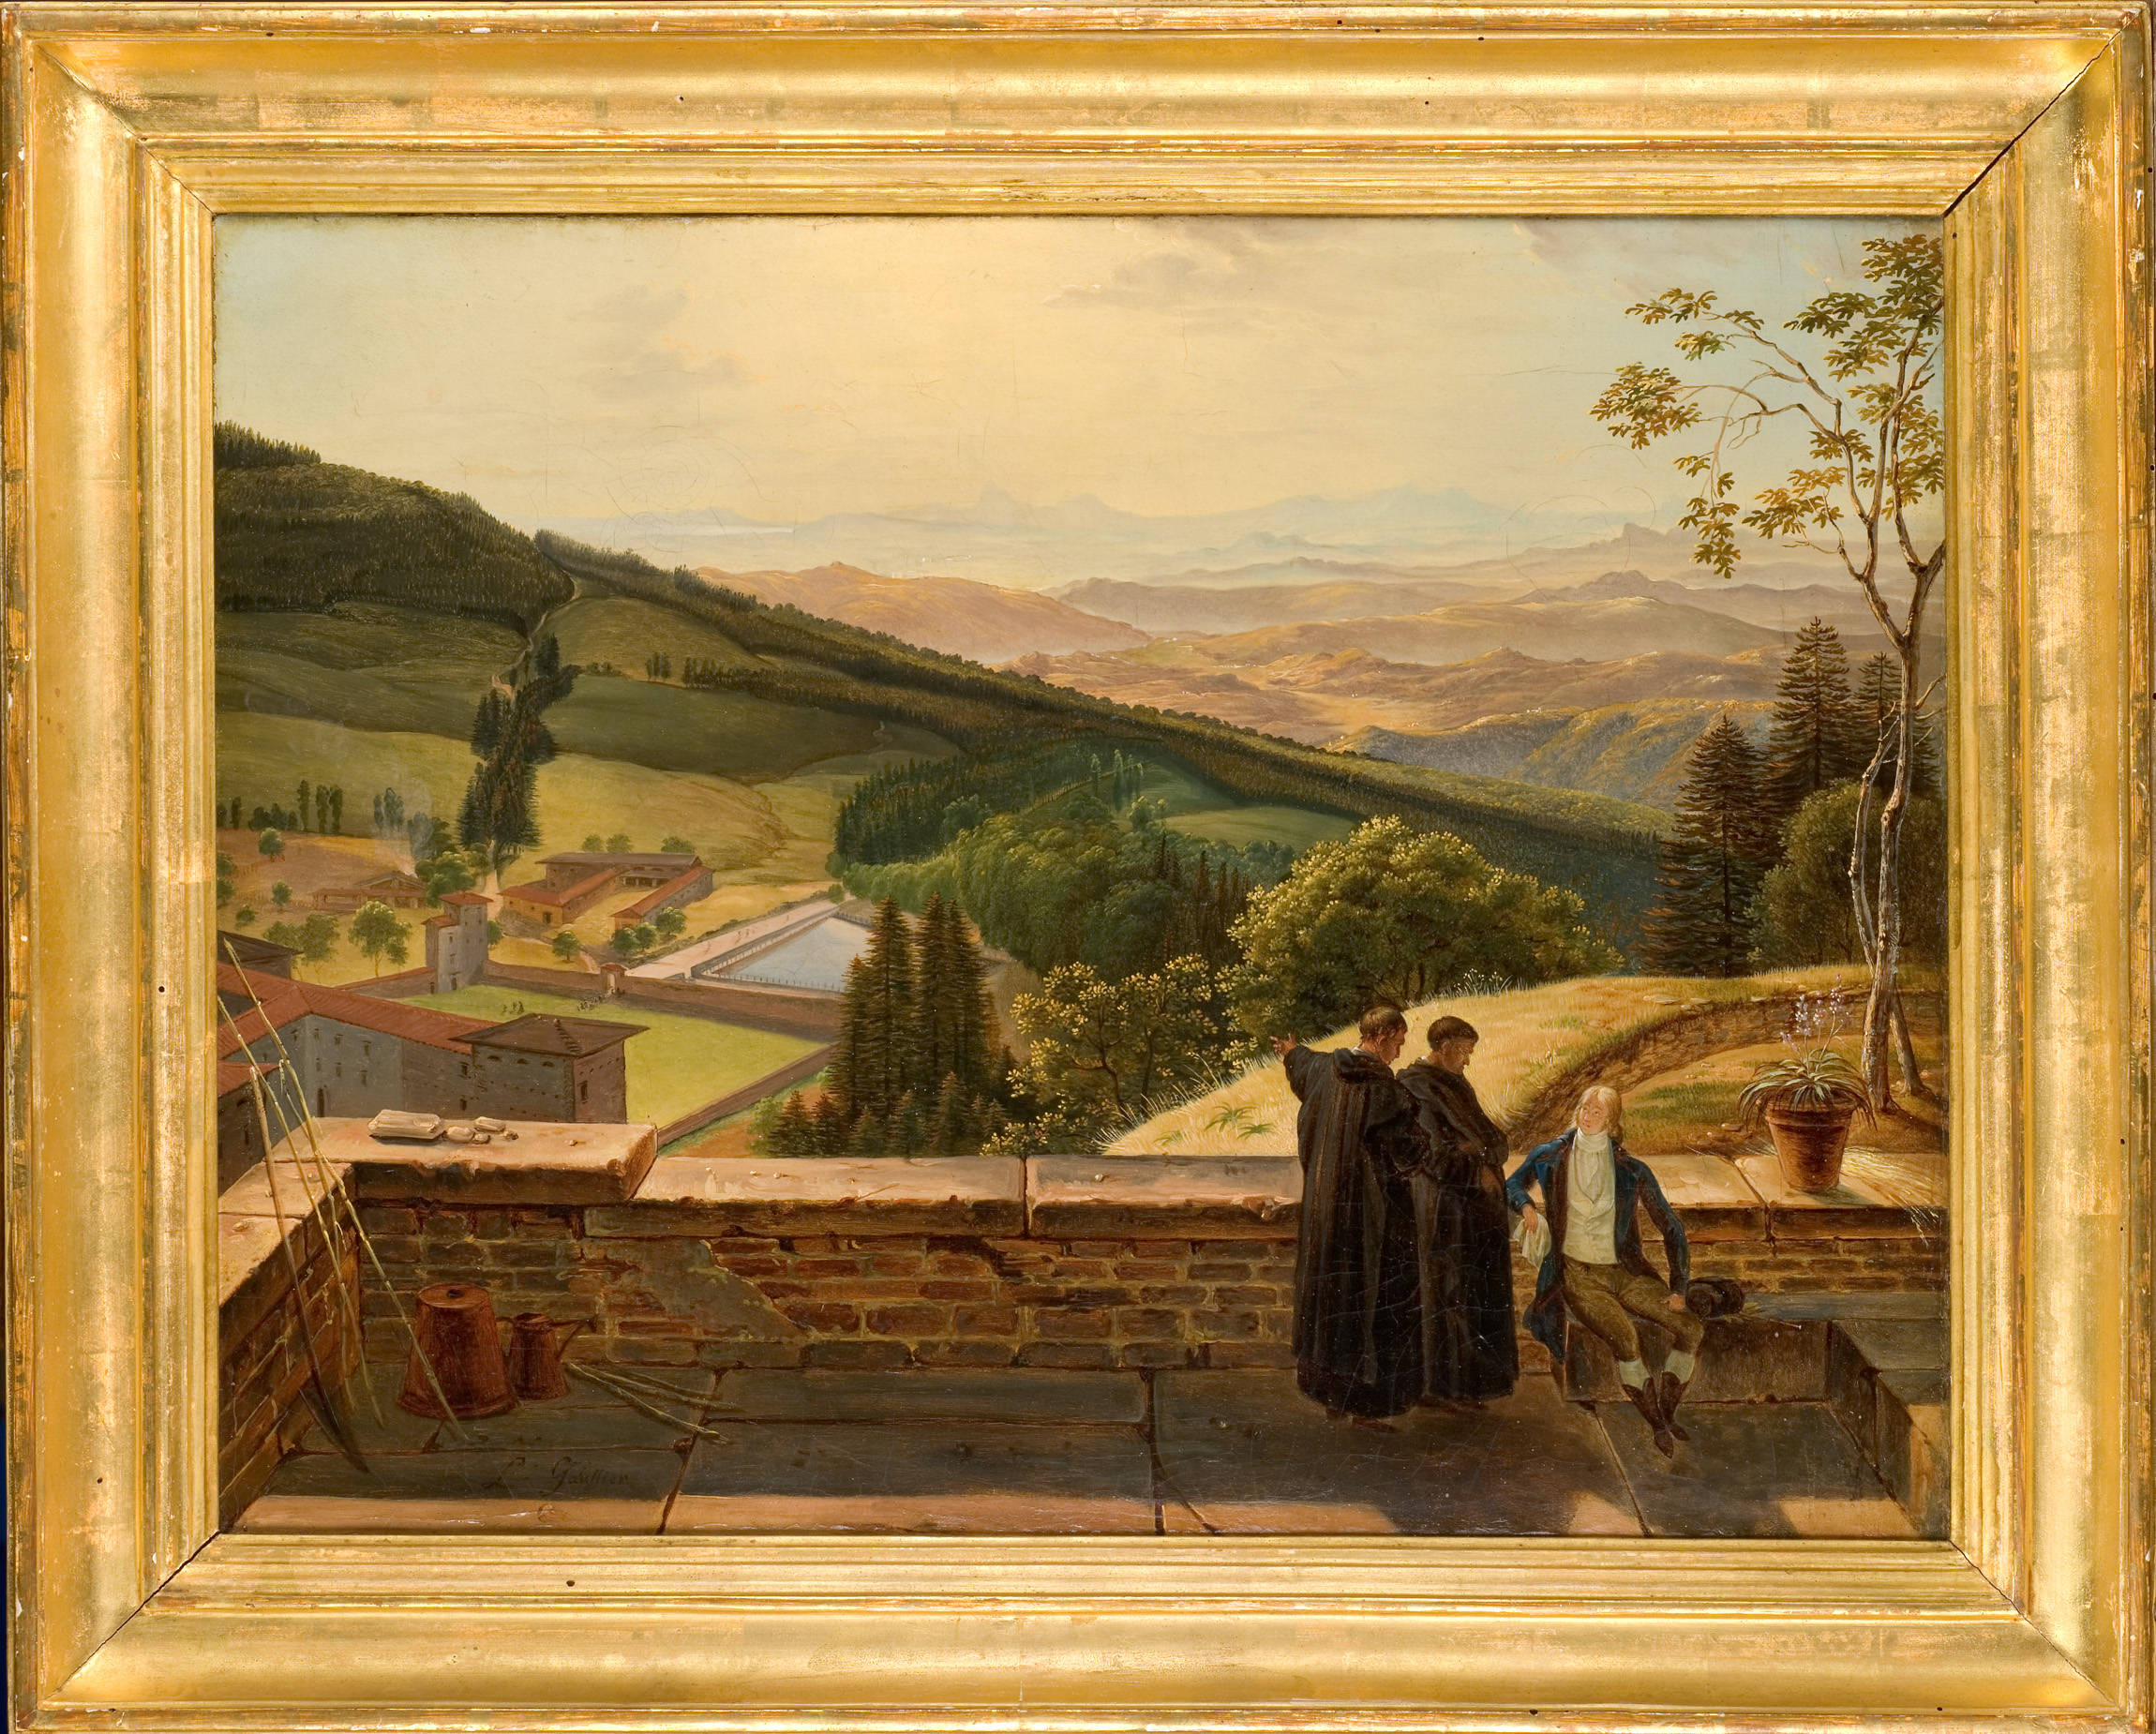 L’Abbaye de Vallombrosa et le val d’Arno vus du Paradisino